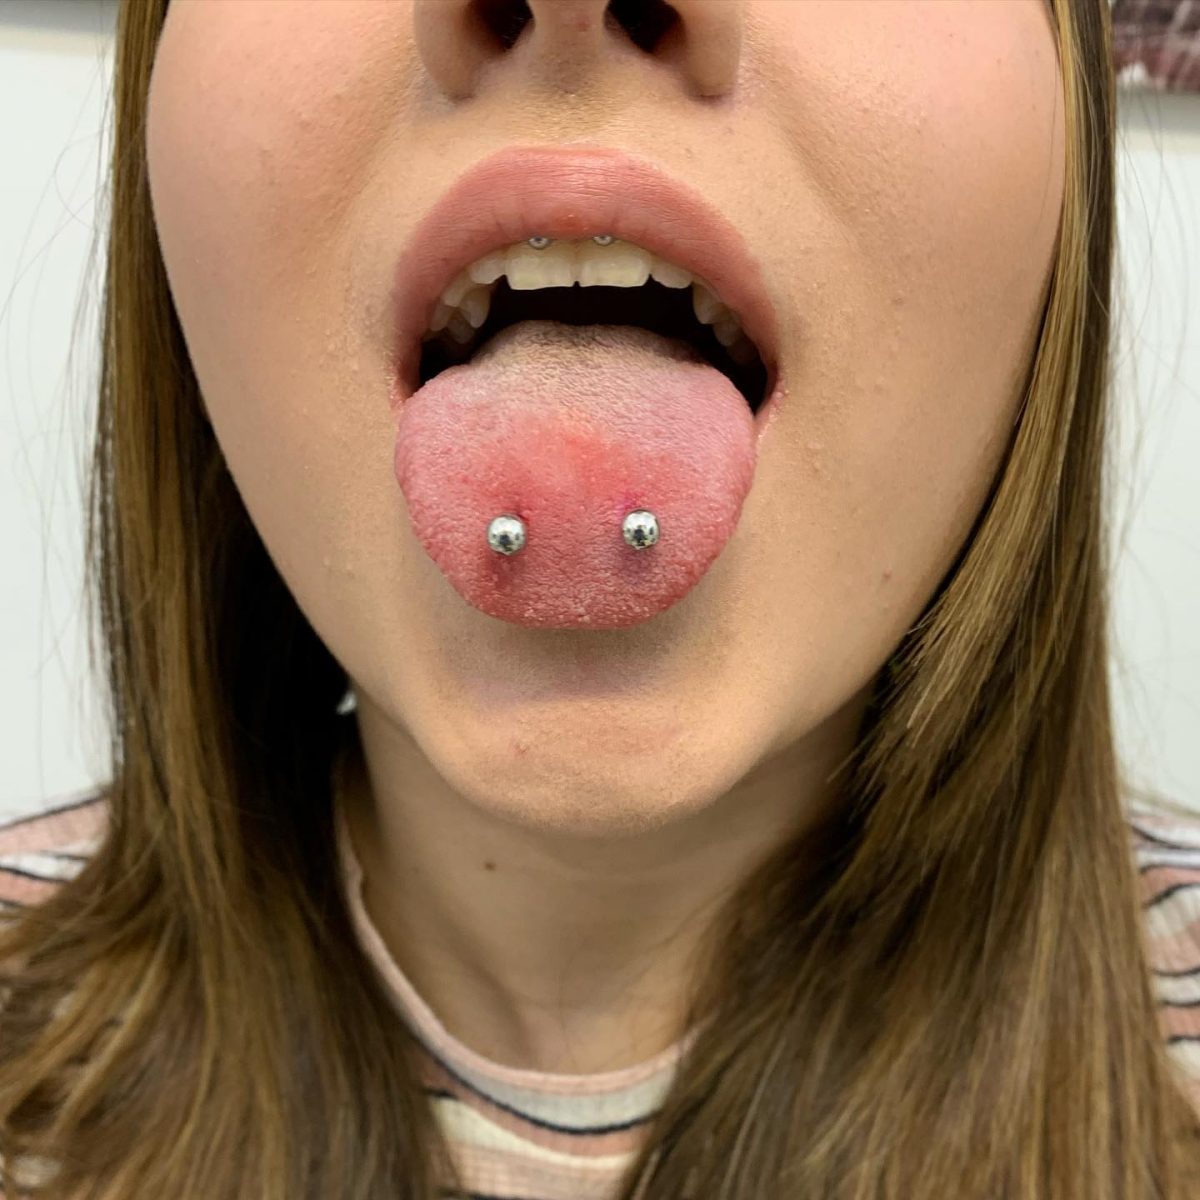 venom bites tongue piercing woman